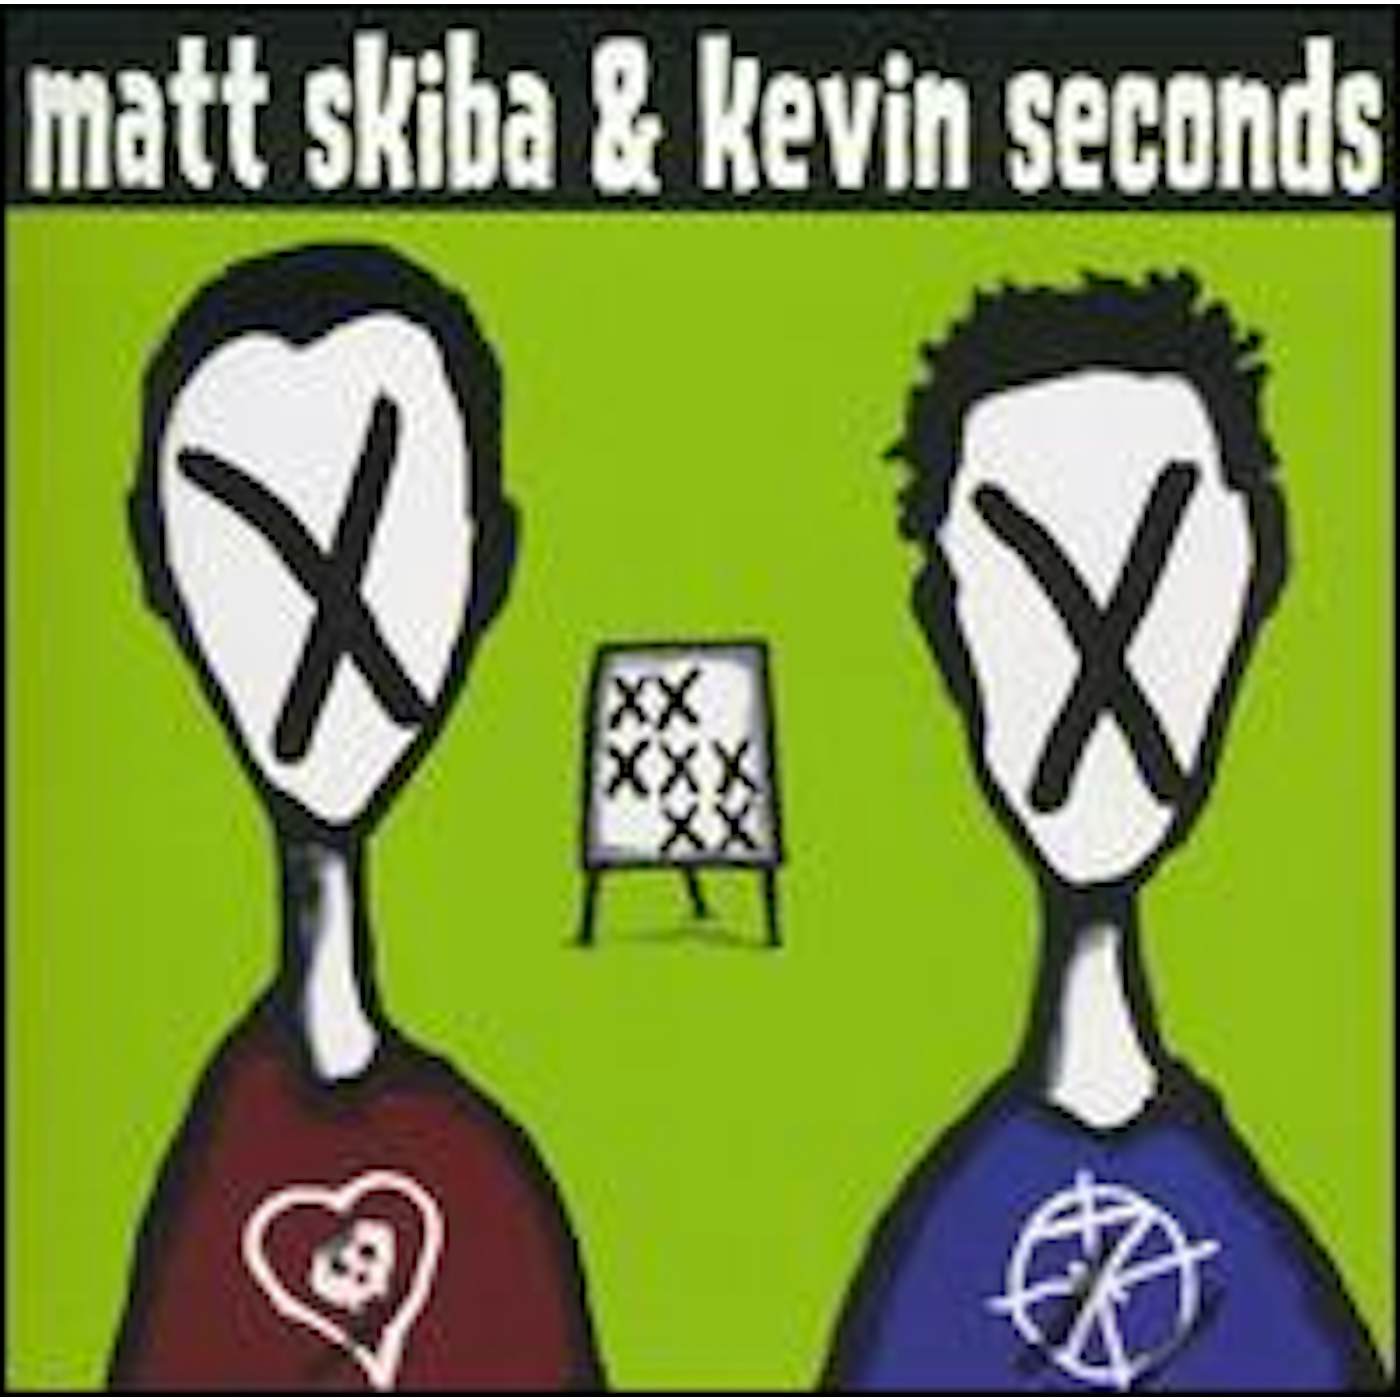 Matt Skiba / Kevin Seconds Split Vinyl Record